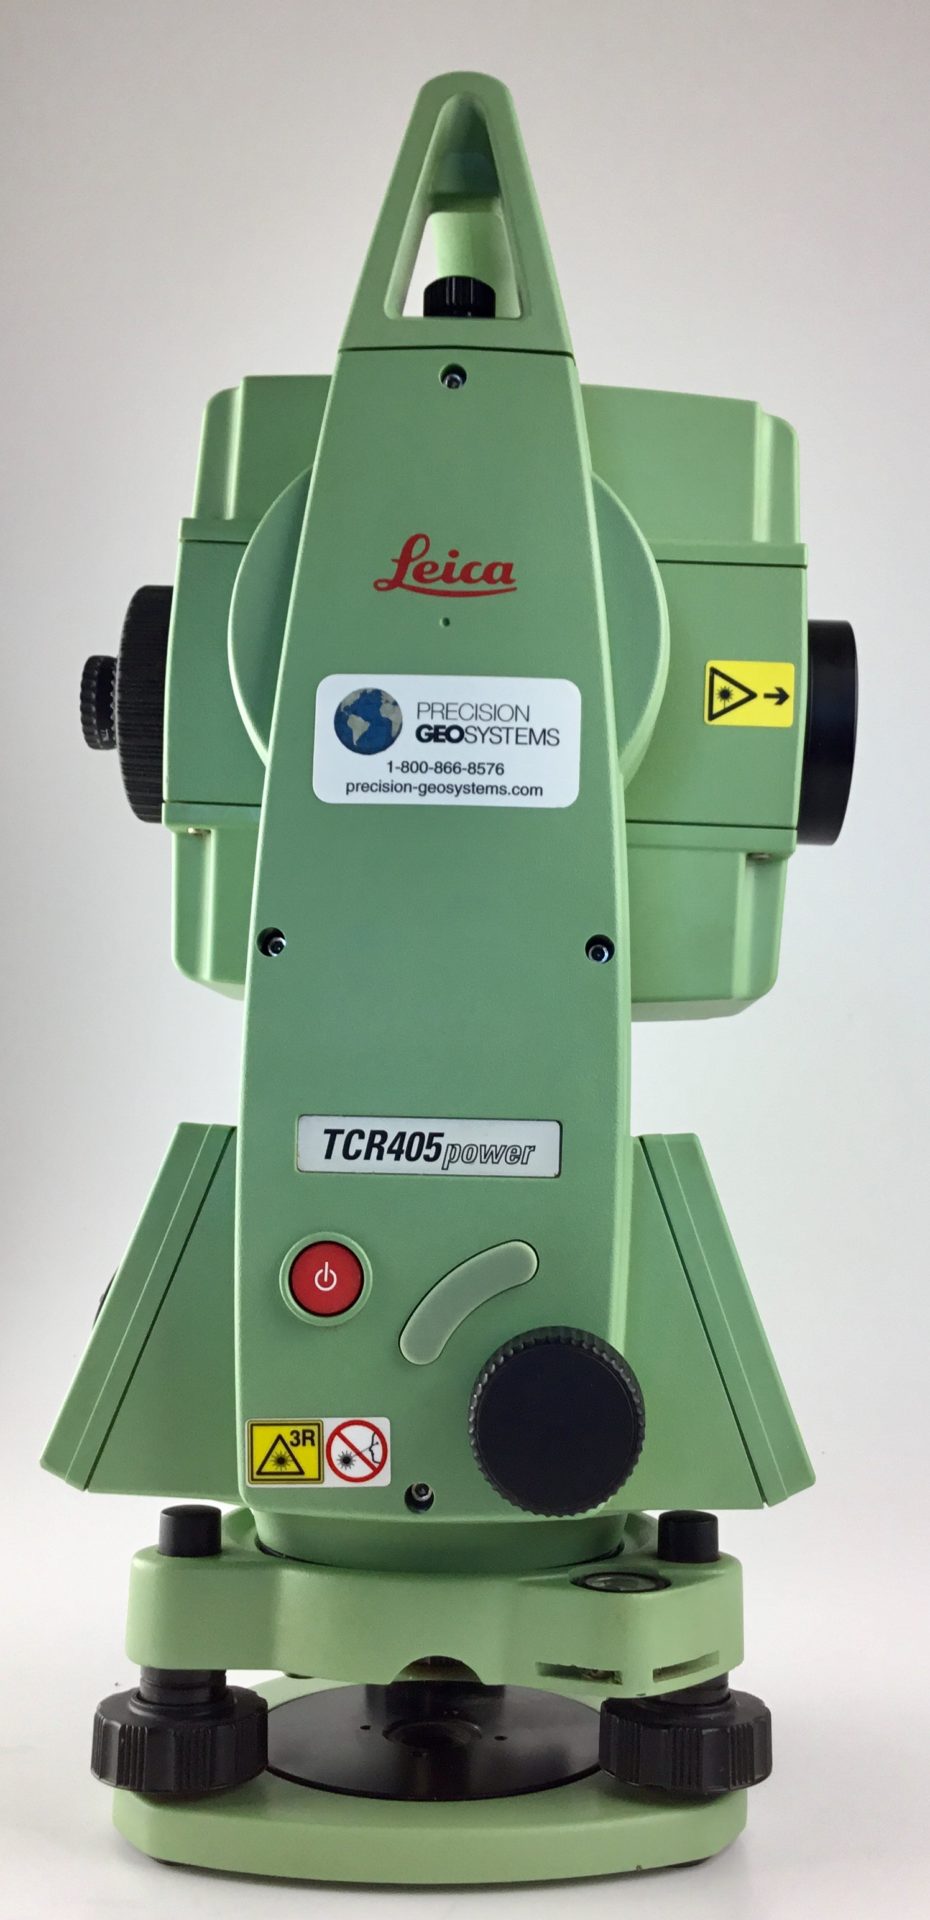 Leica TCR 405 Power